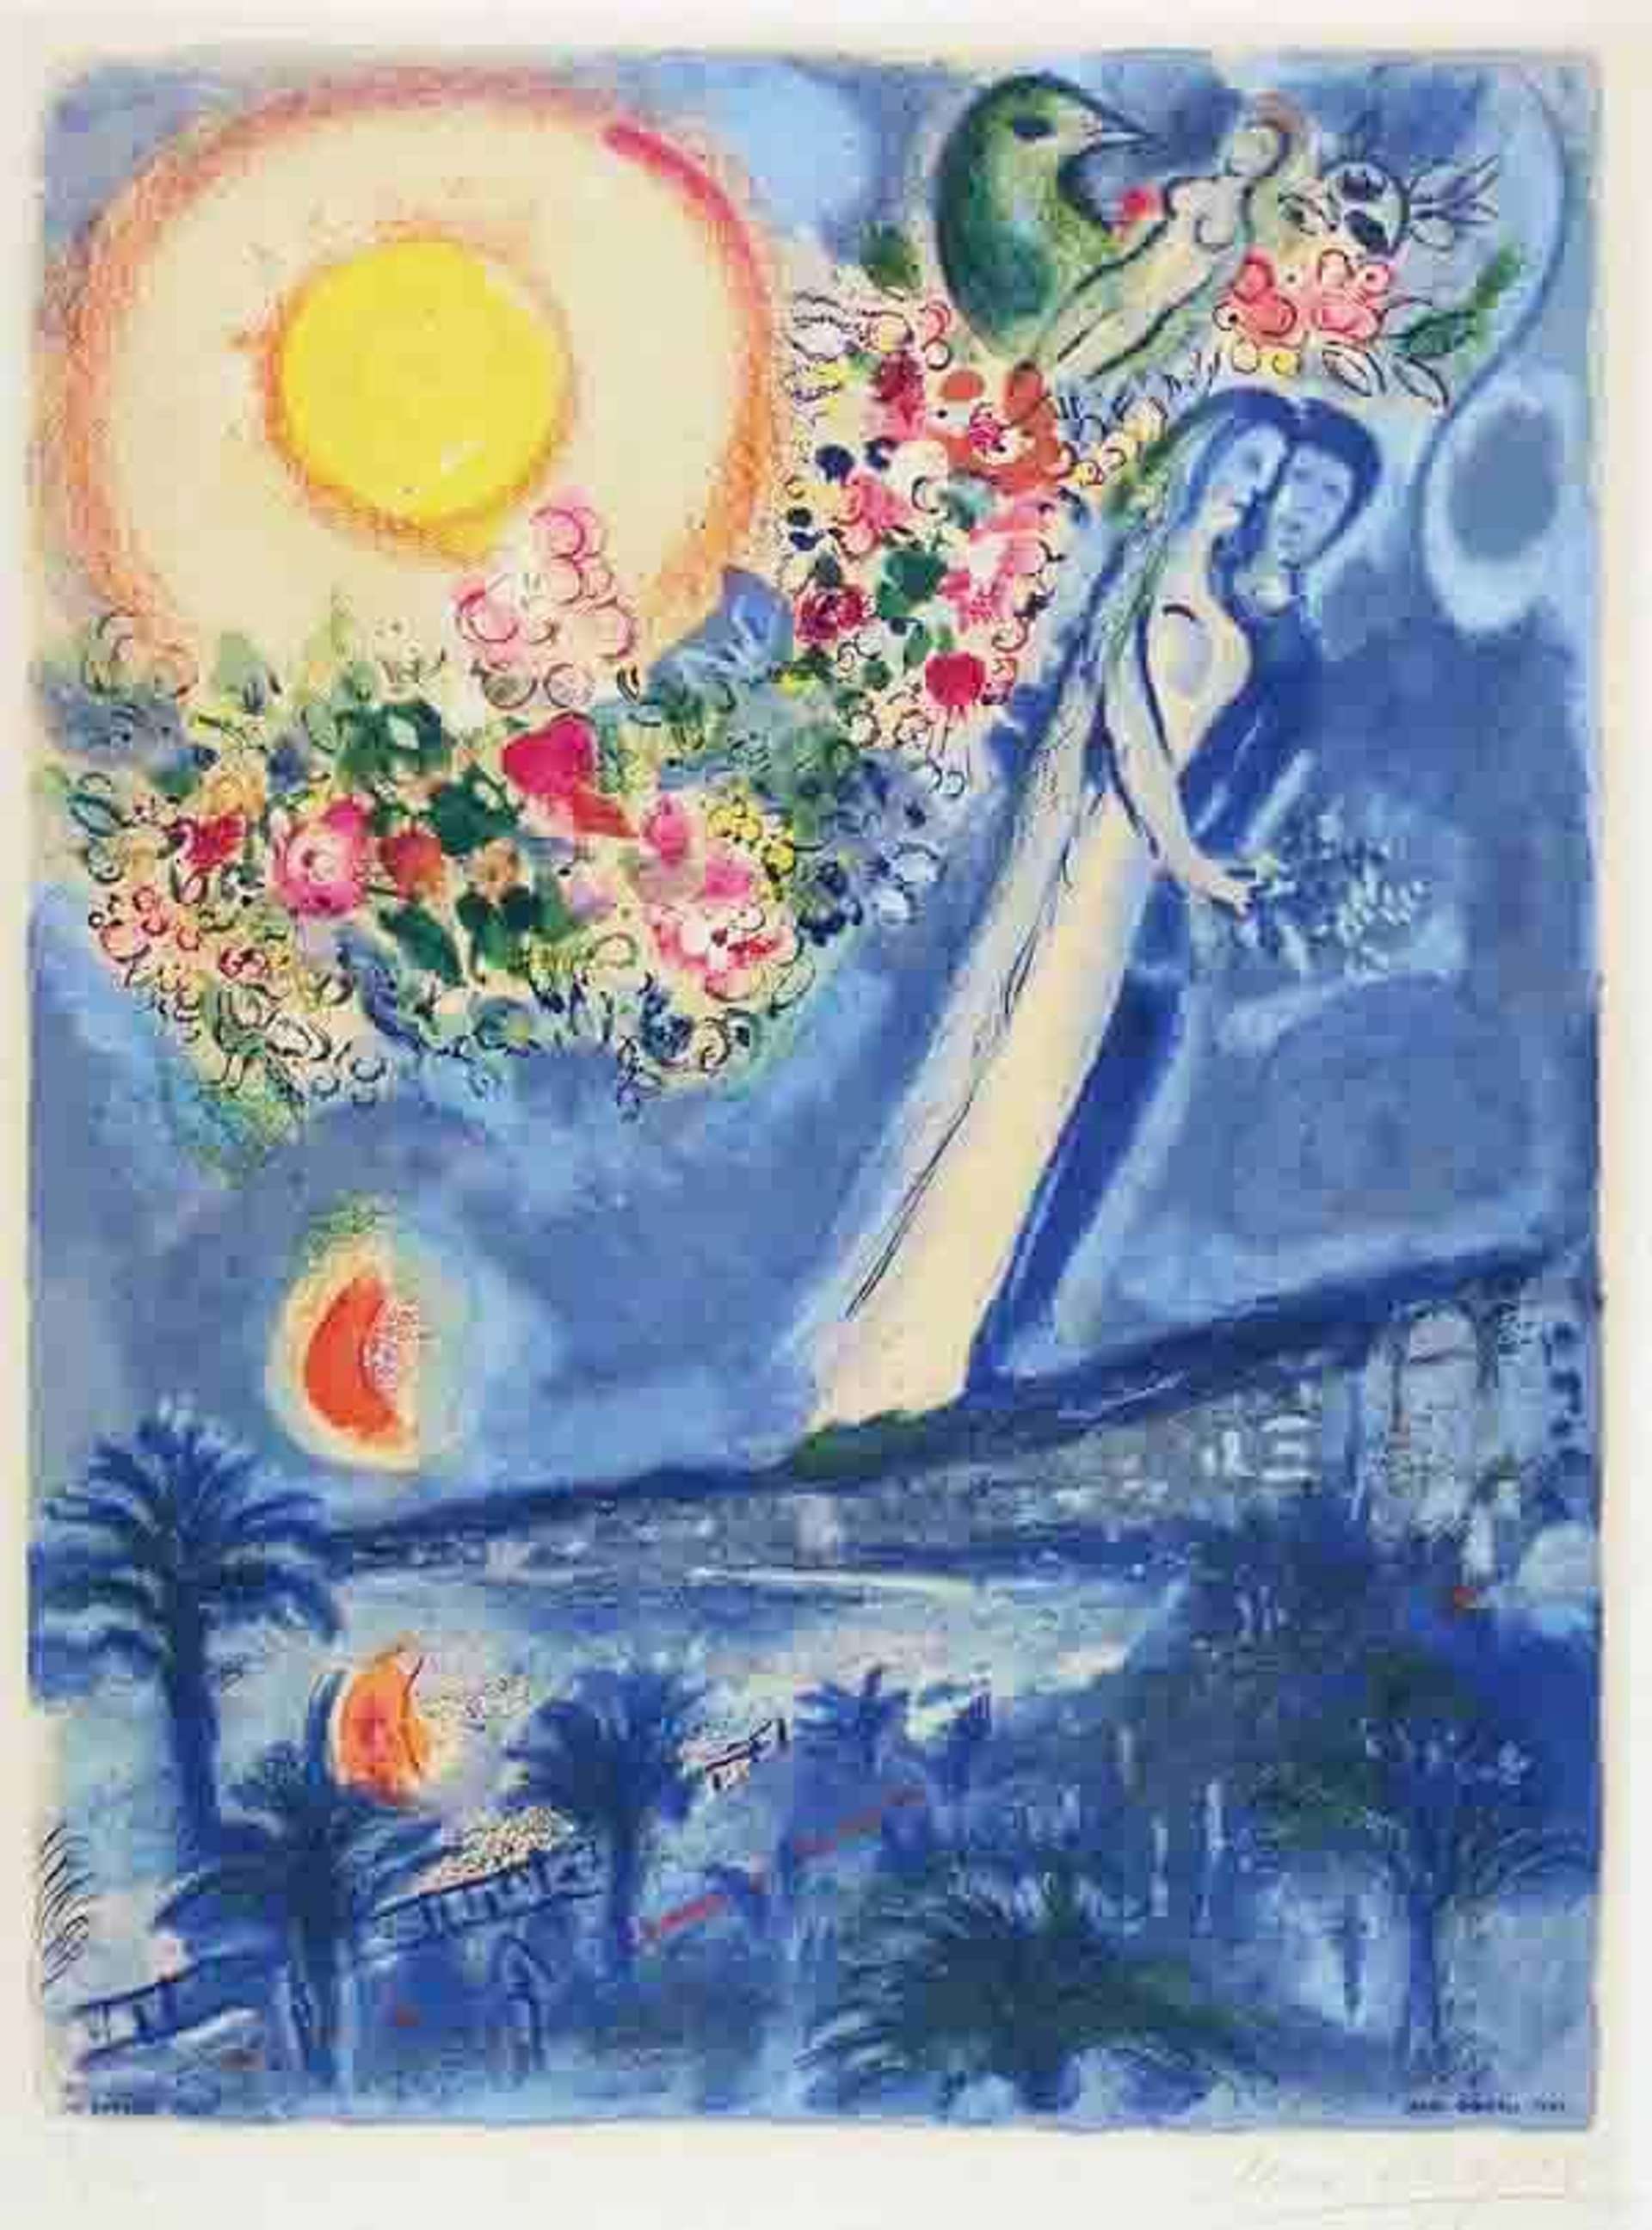 Marc Chagall: Fiancés Dans Le Ciel De Nice - Signed Print